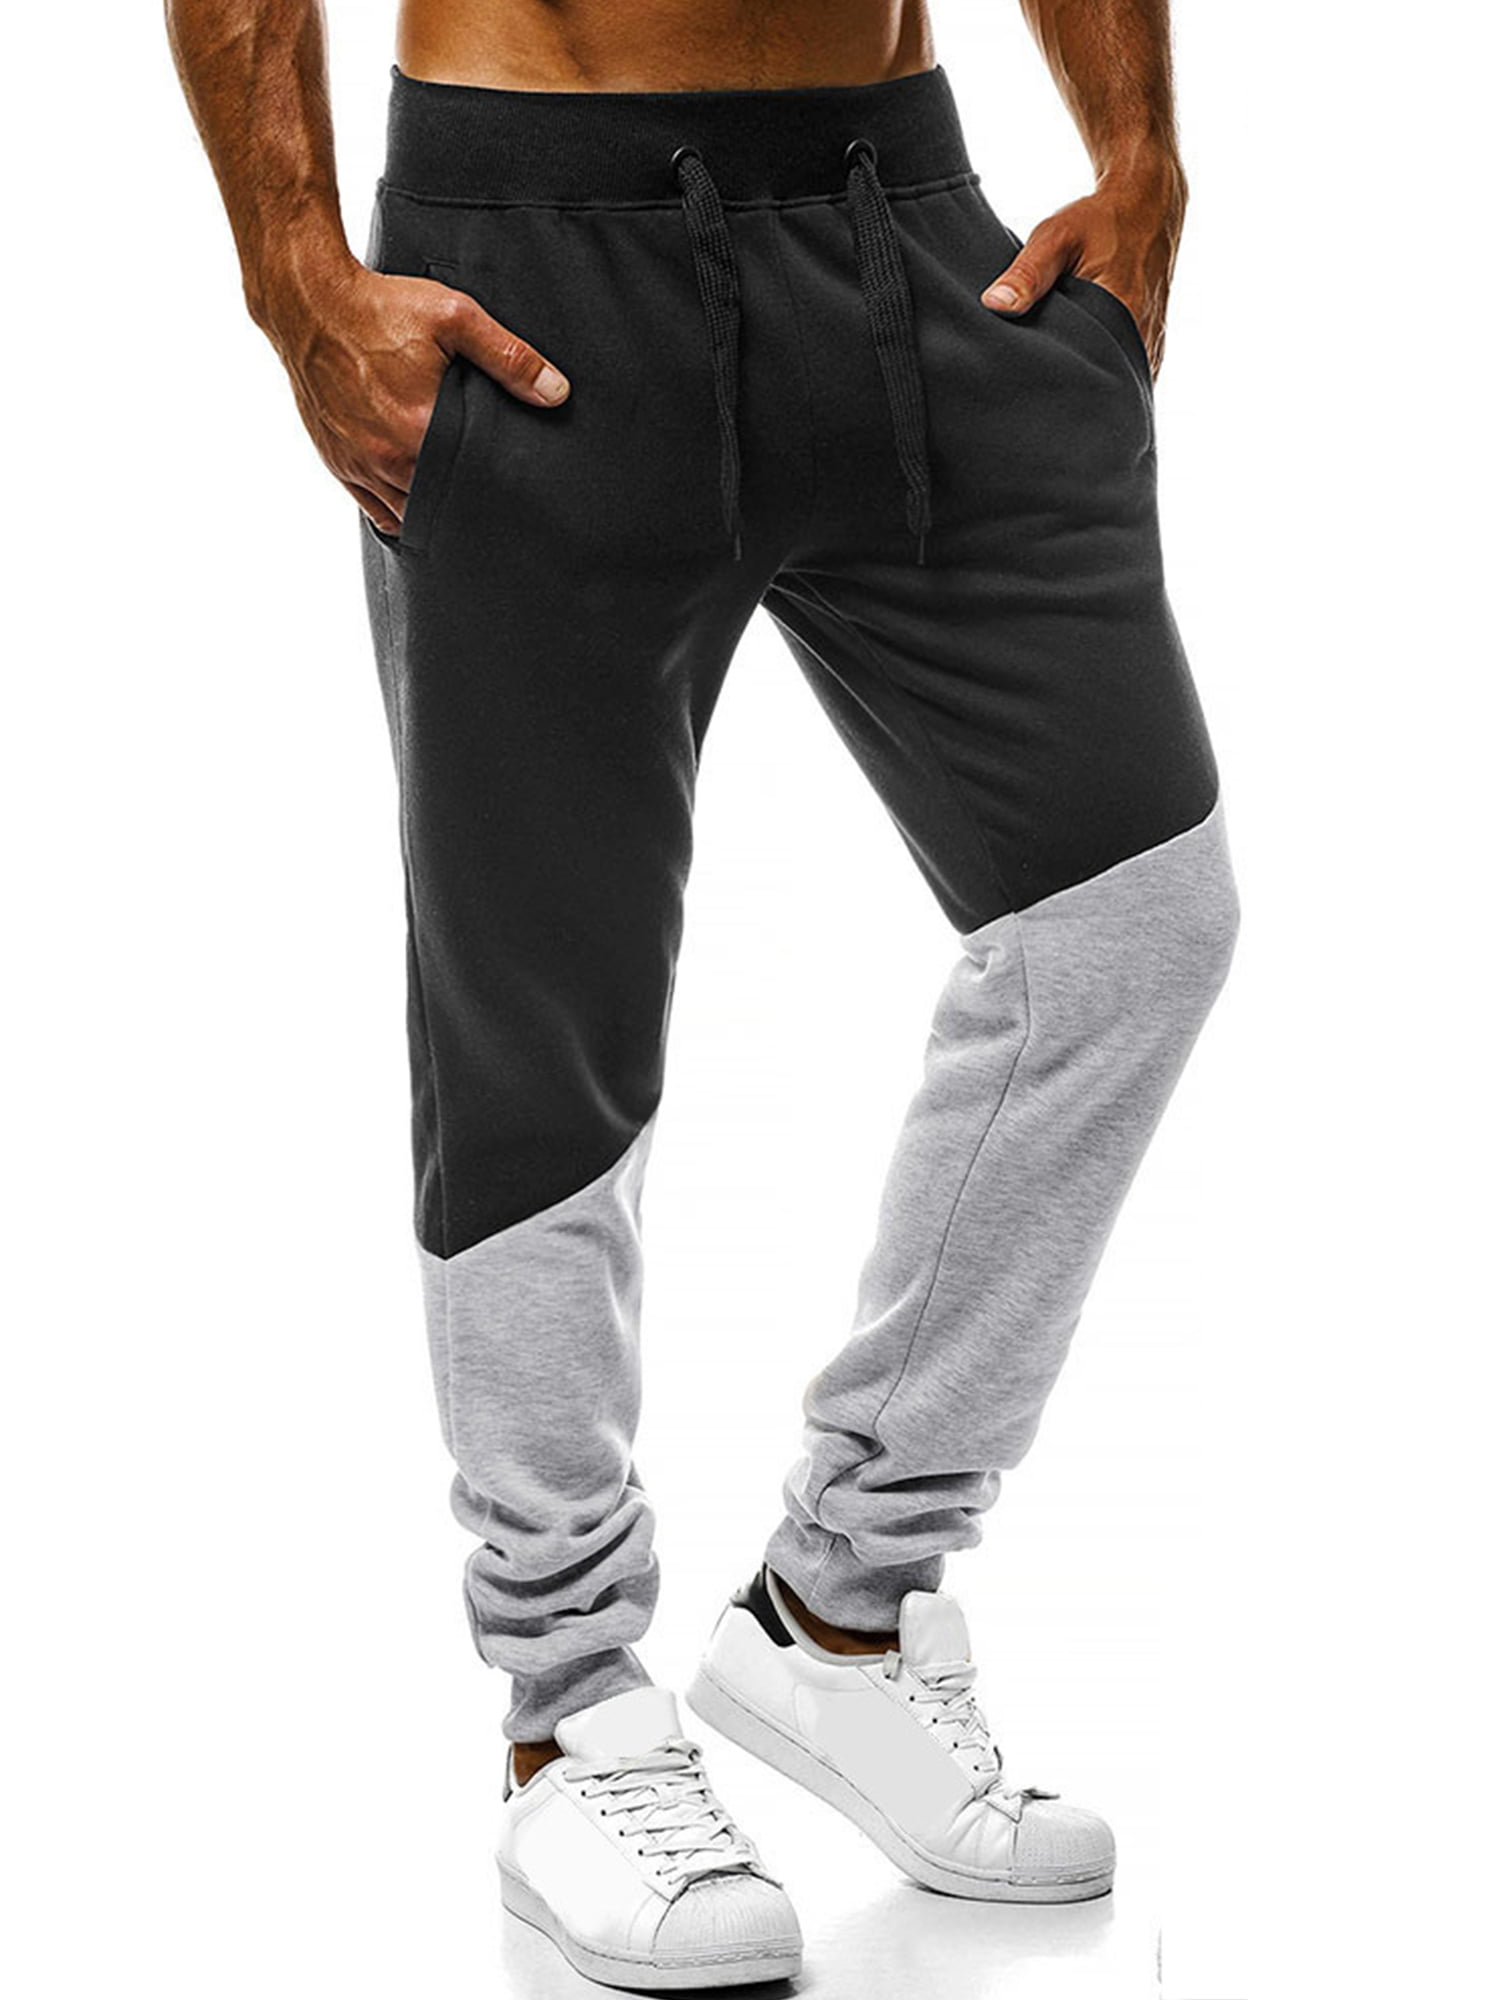 Boys Casual Training Sweatpants I Love You Adjustable Waist Pants with Pocket 